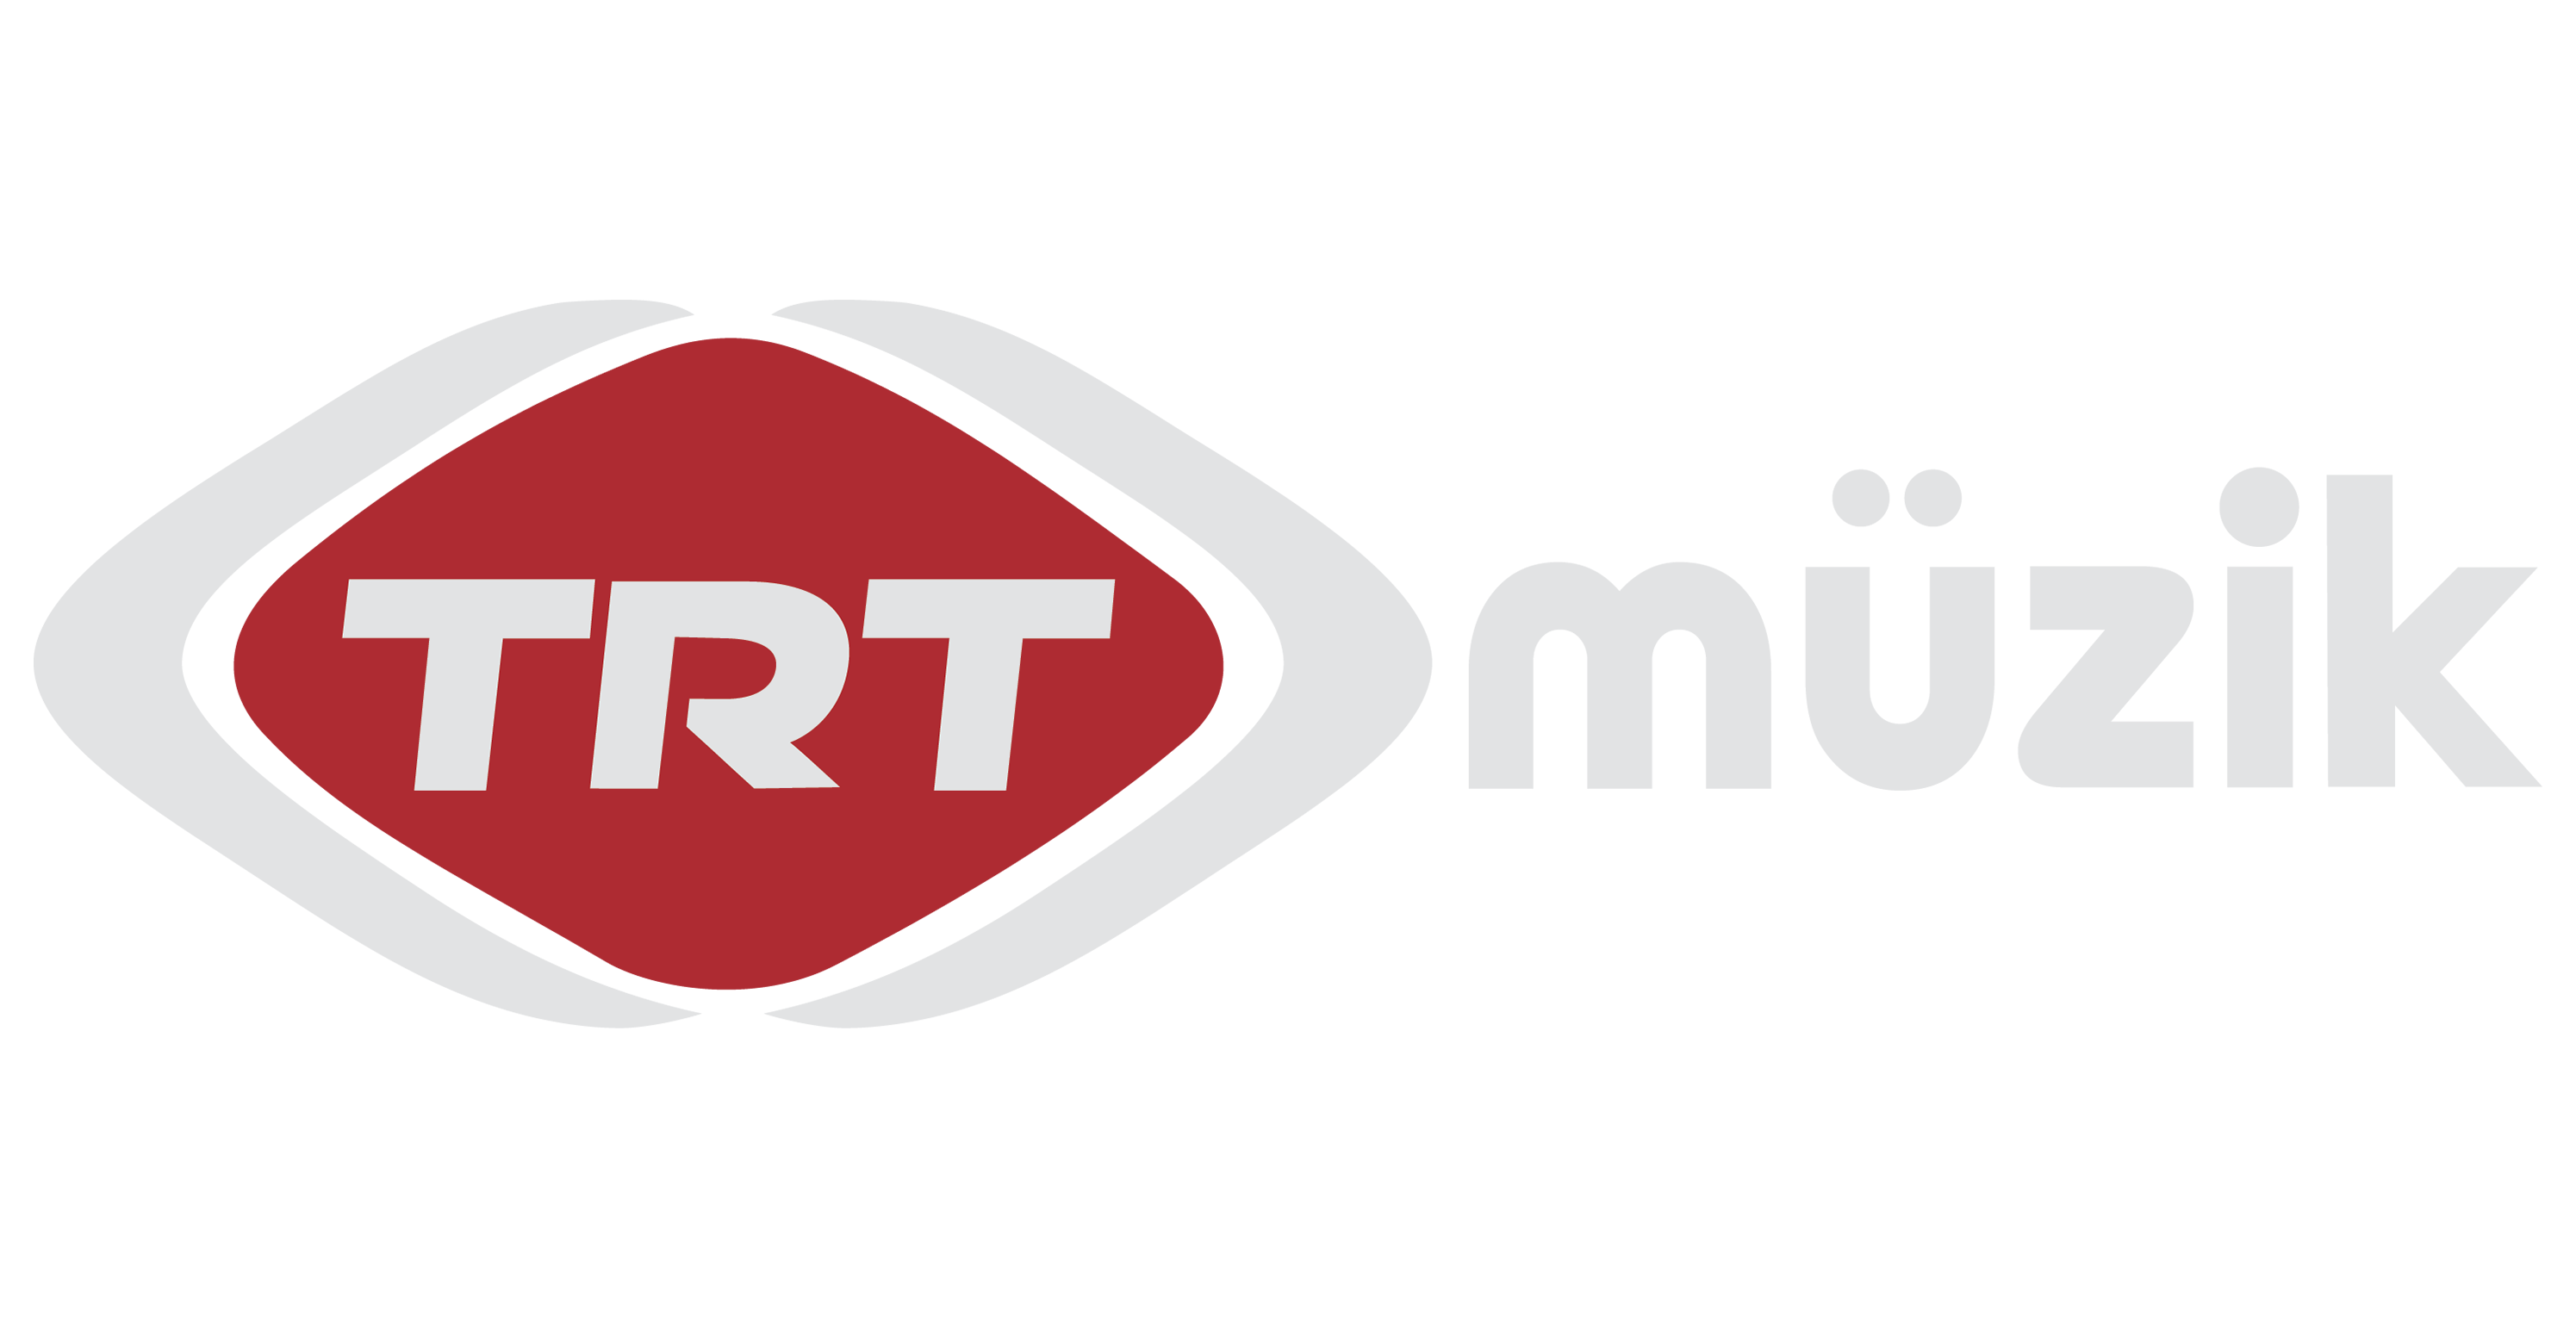 Trt canlı yayın. TRT. TRT Music. Анкара TRT. Турецкая Телерадиокомпания.